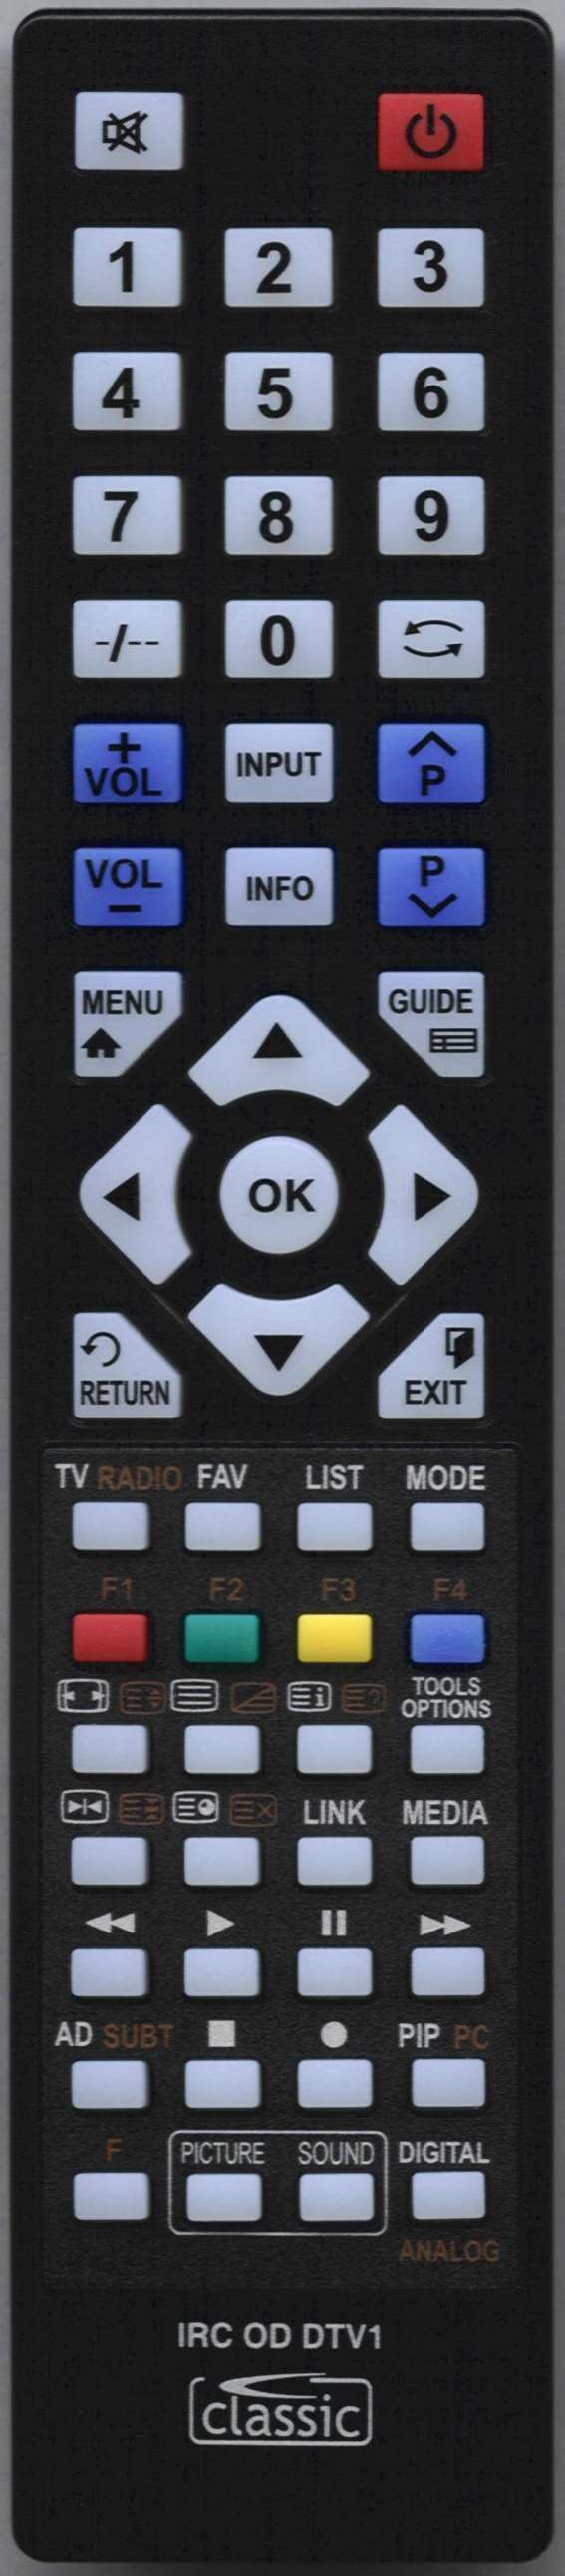 Beko 14242 TDS Remote Control